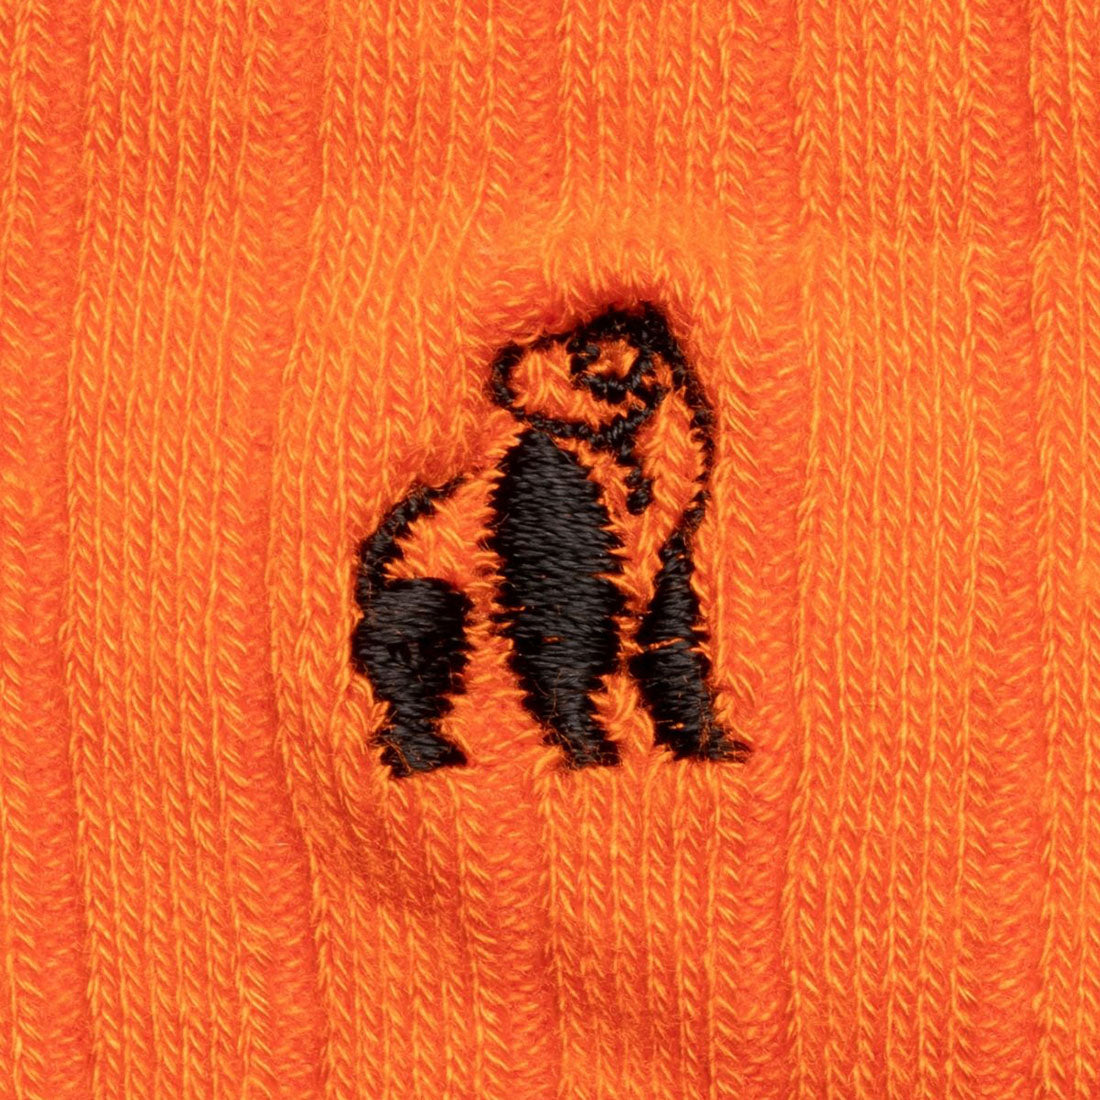 Orange and Blue Sock Bundle - Four Pairs